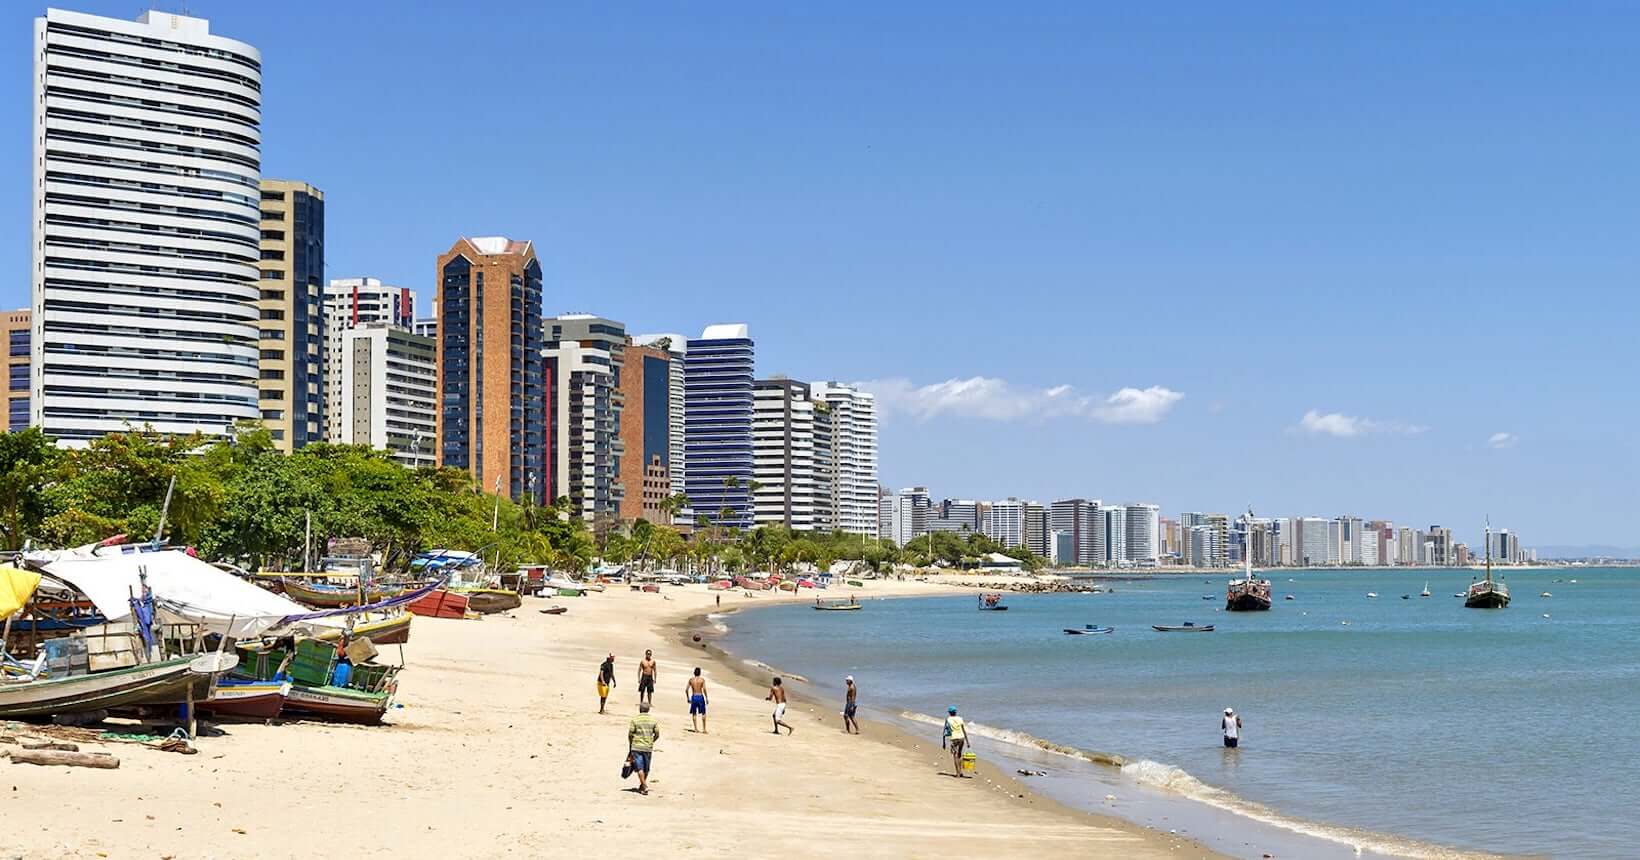 Hoteis em Fortaleza na praia de Mucuripe